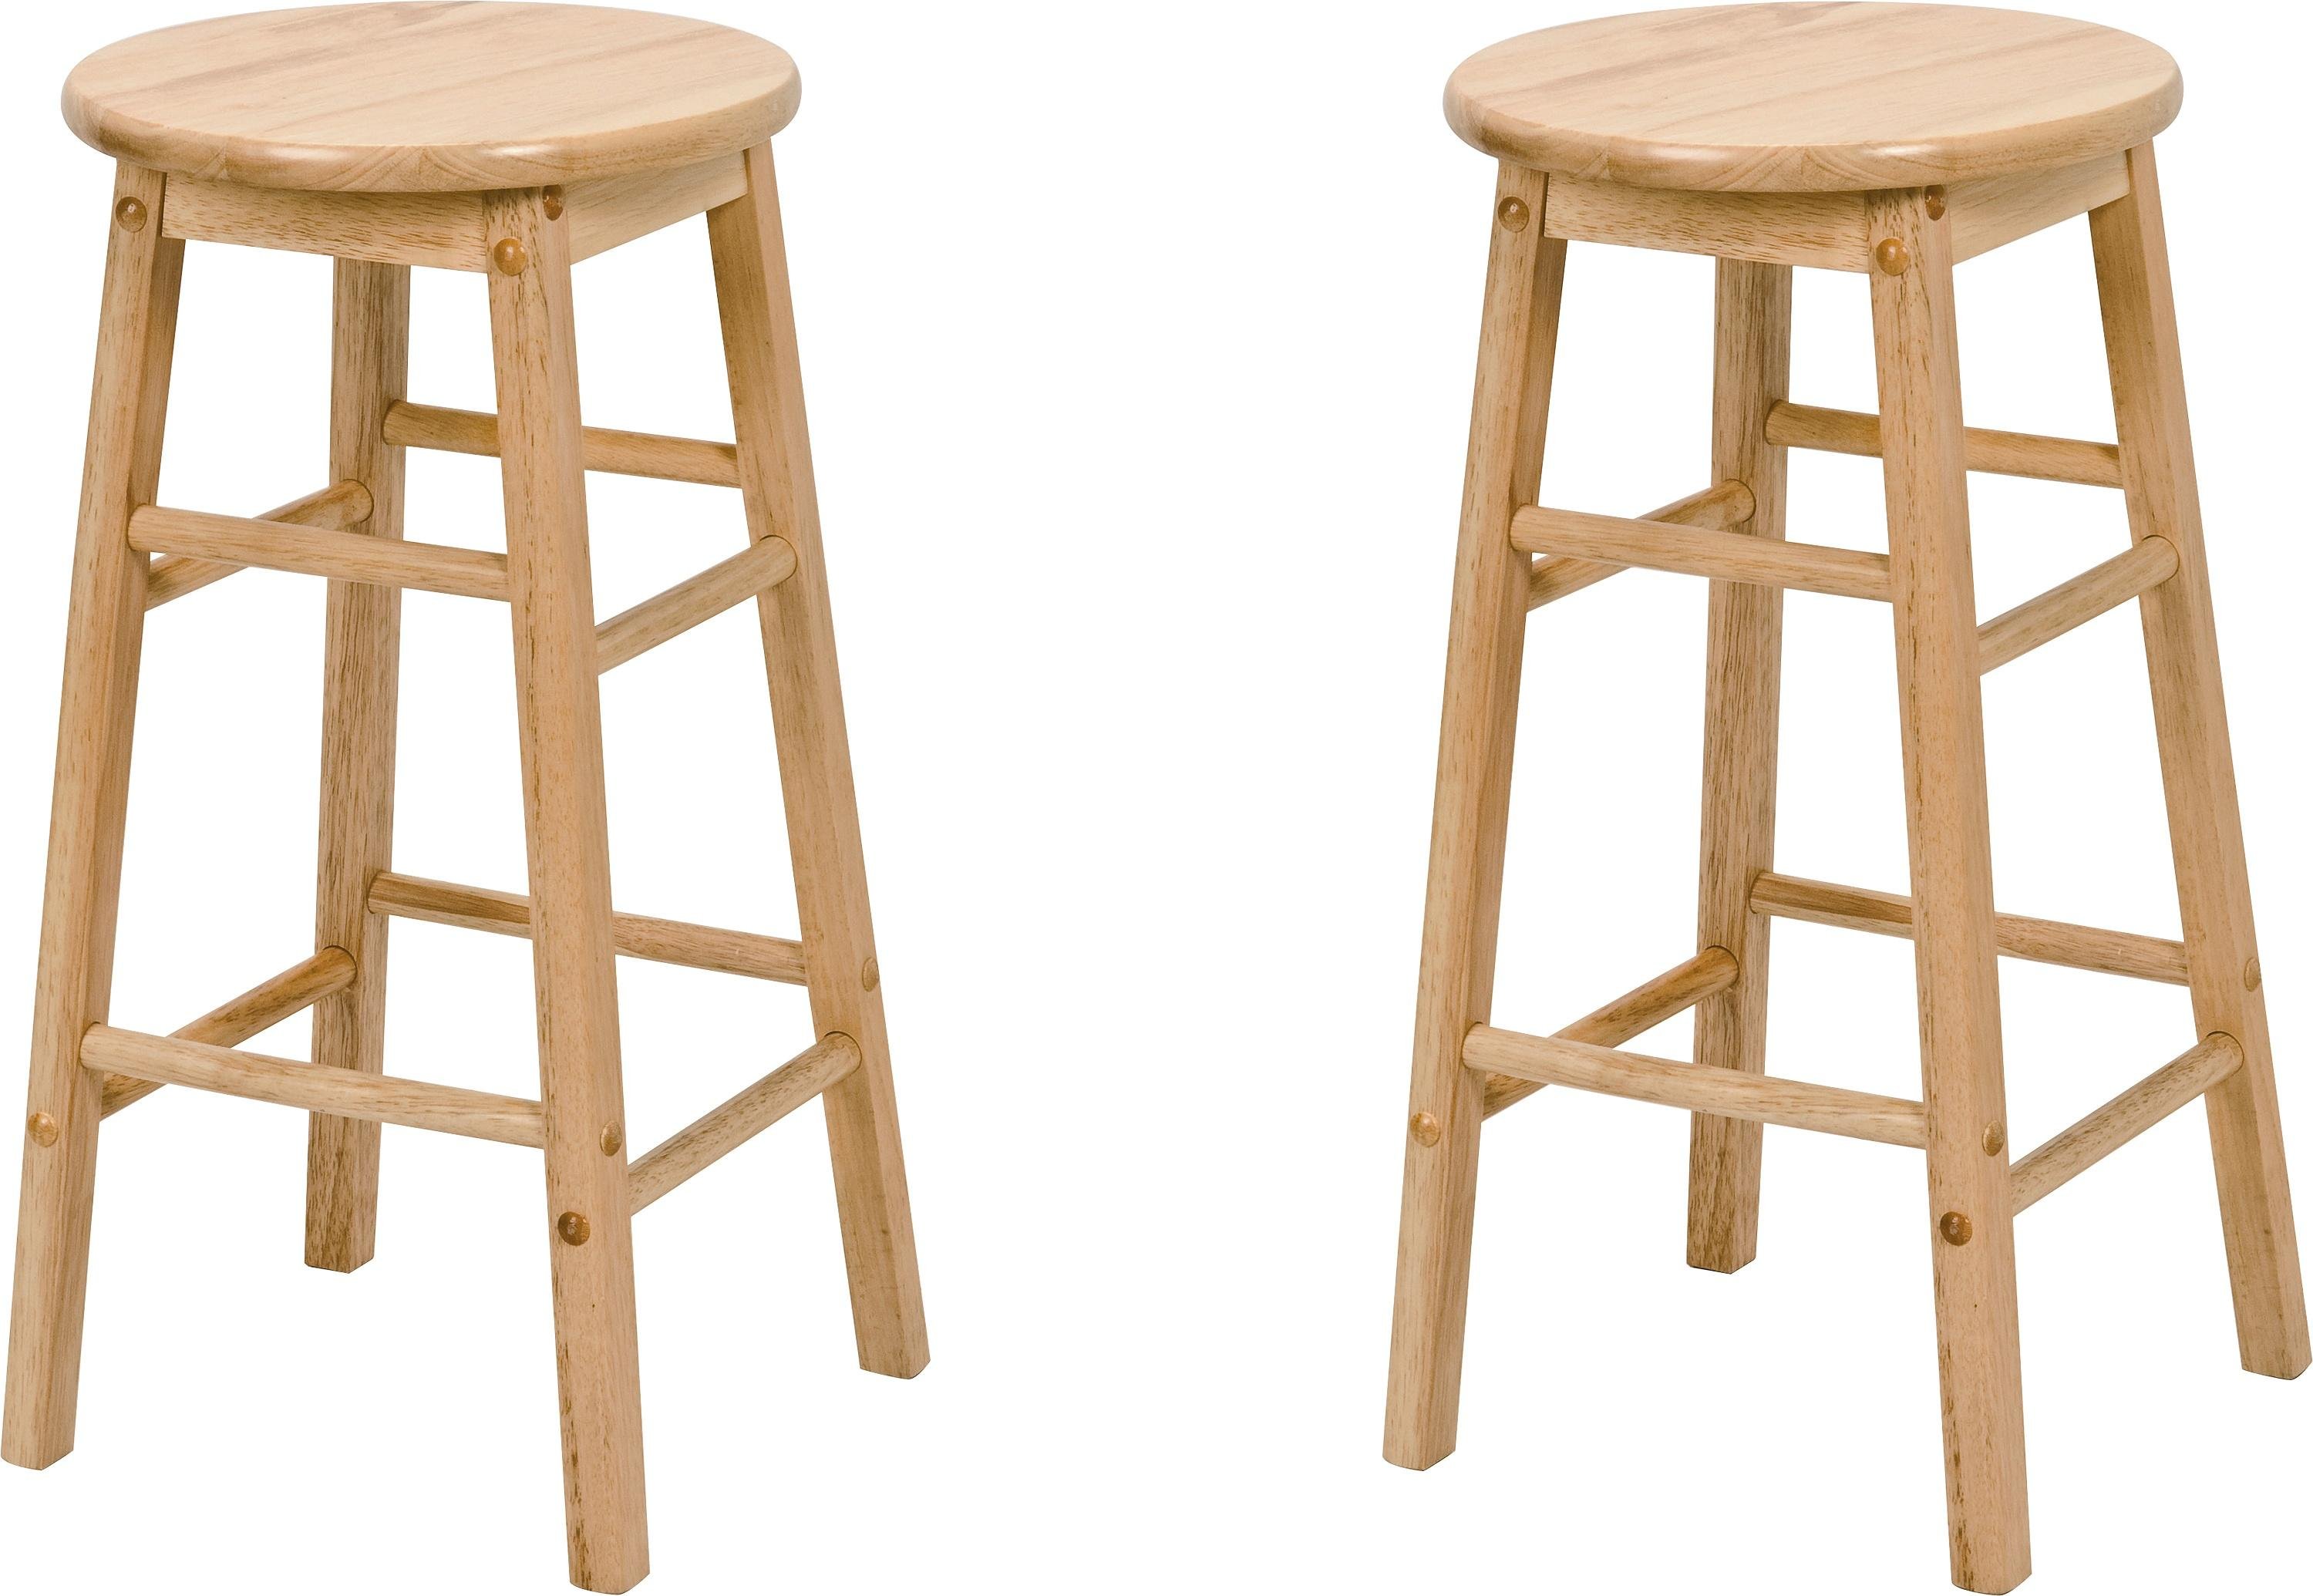 solid wood kitchen bar stools